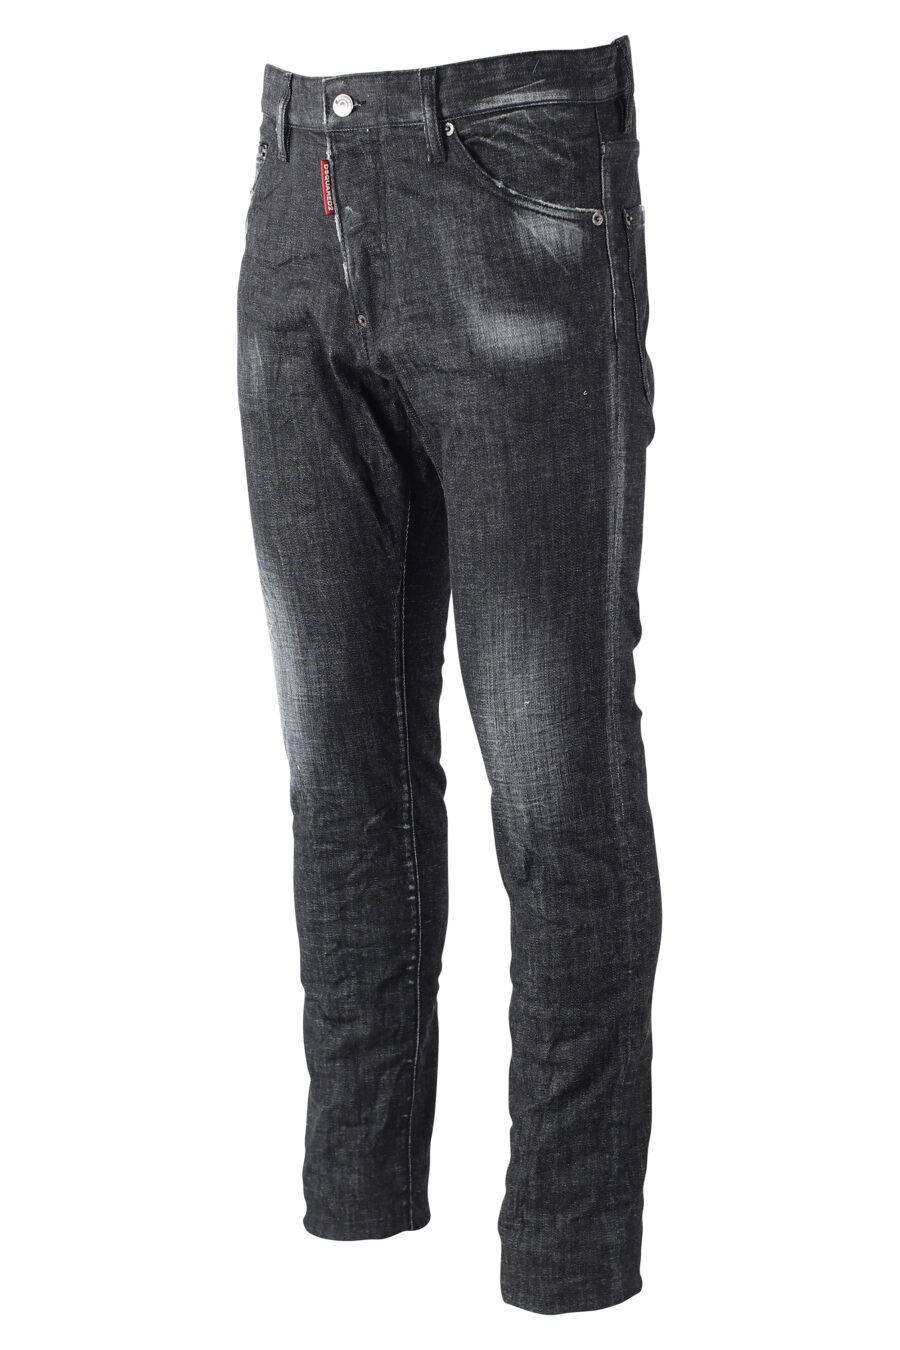 Pantalón vaquero "cool guy jean" negro semidesgastado - IMG 9700